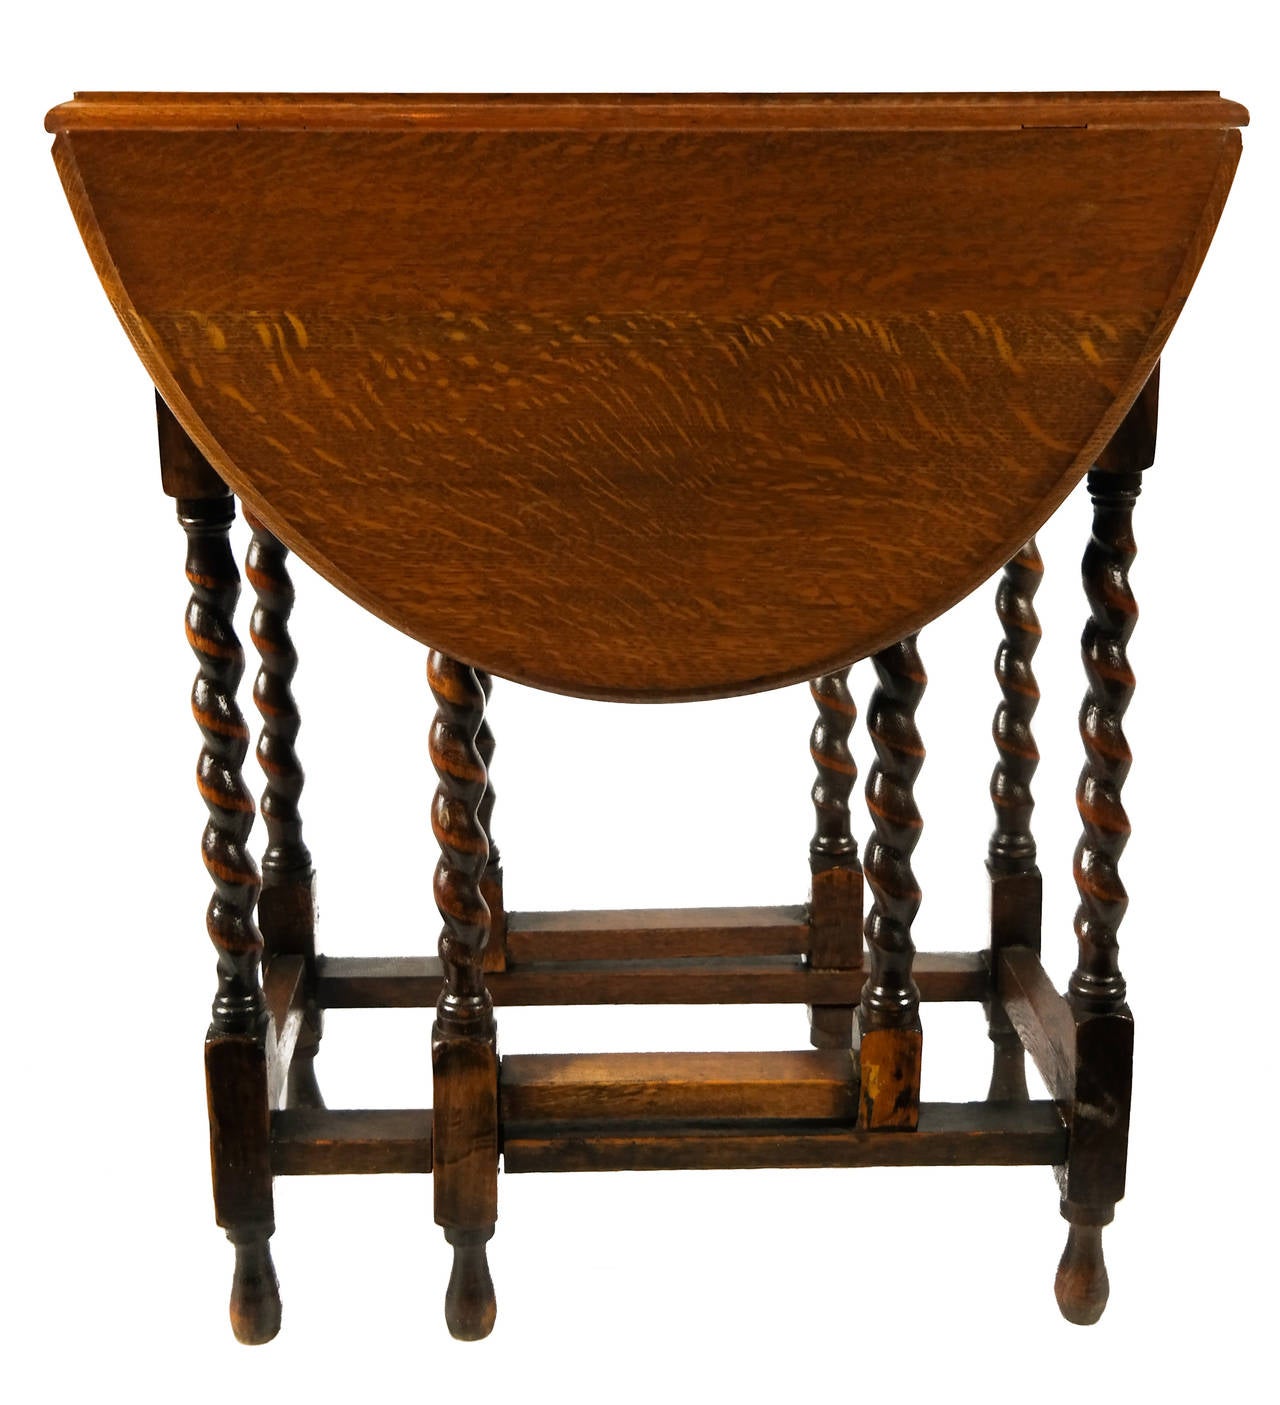 Oak gateleg table on barley twist legs, English, ca. 1920s

Depth without leaves: 11.5